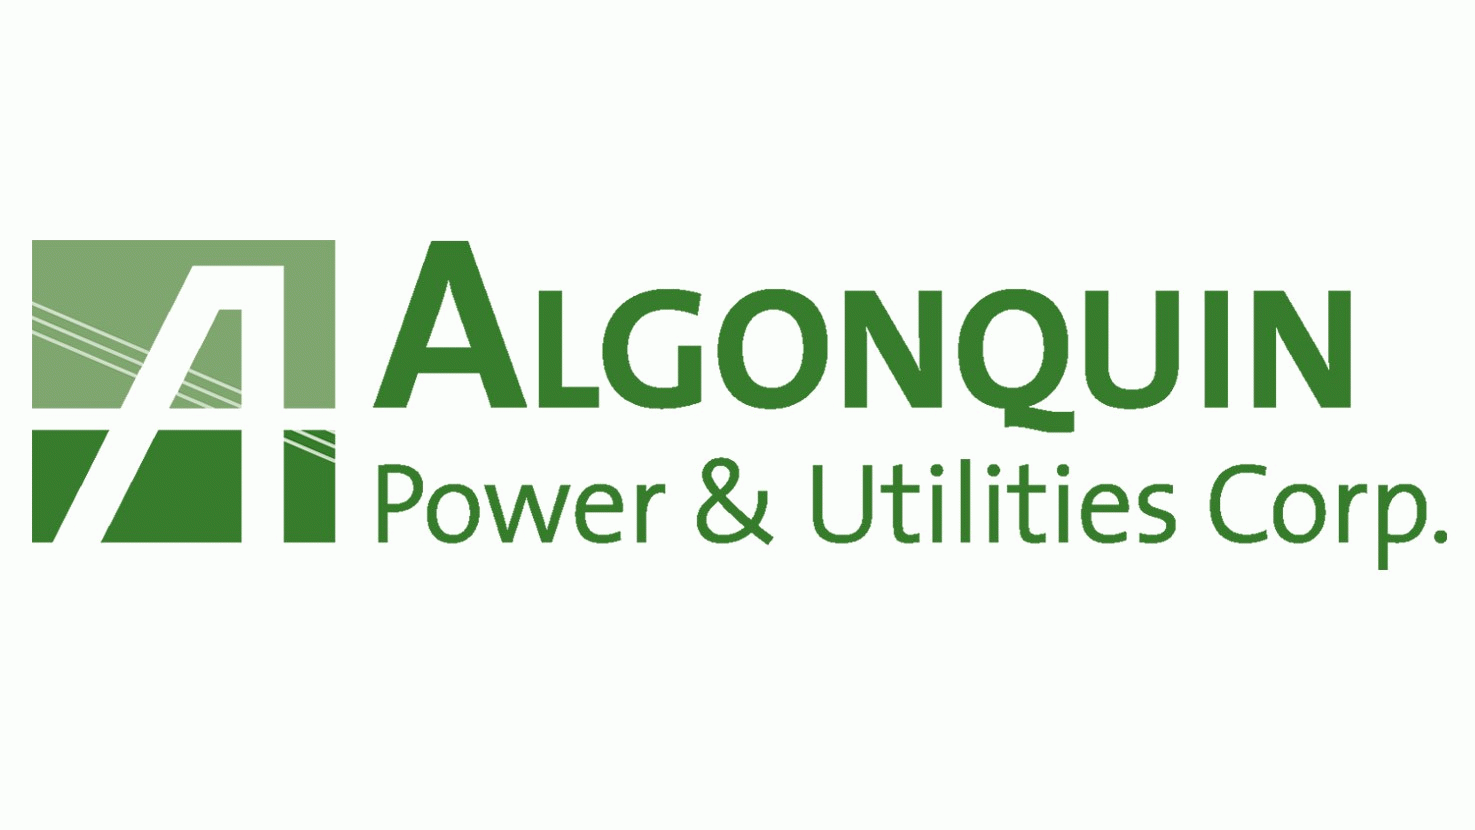 Algonquin Power & Utilities Corp. B